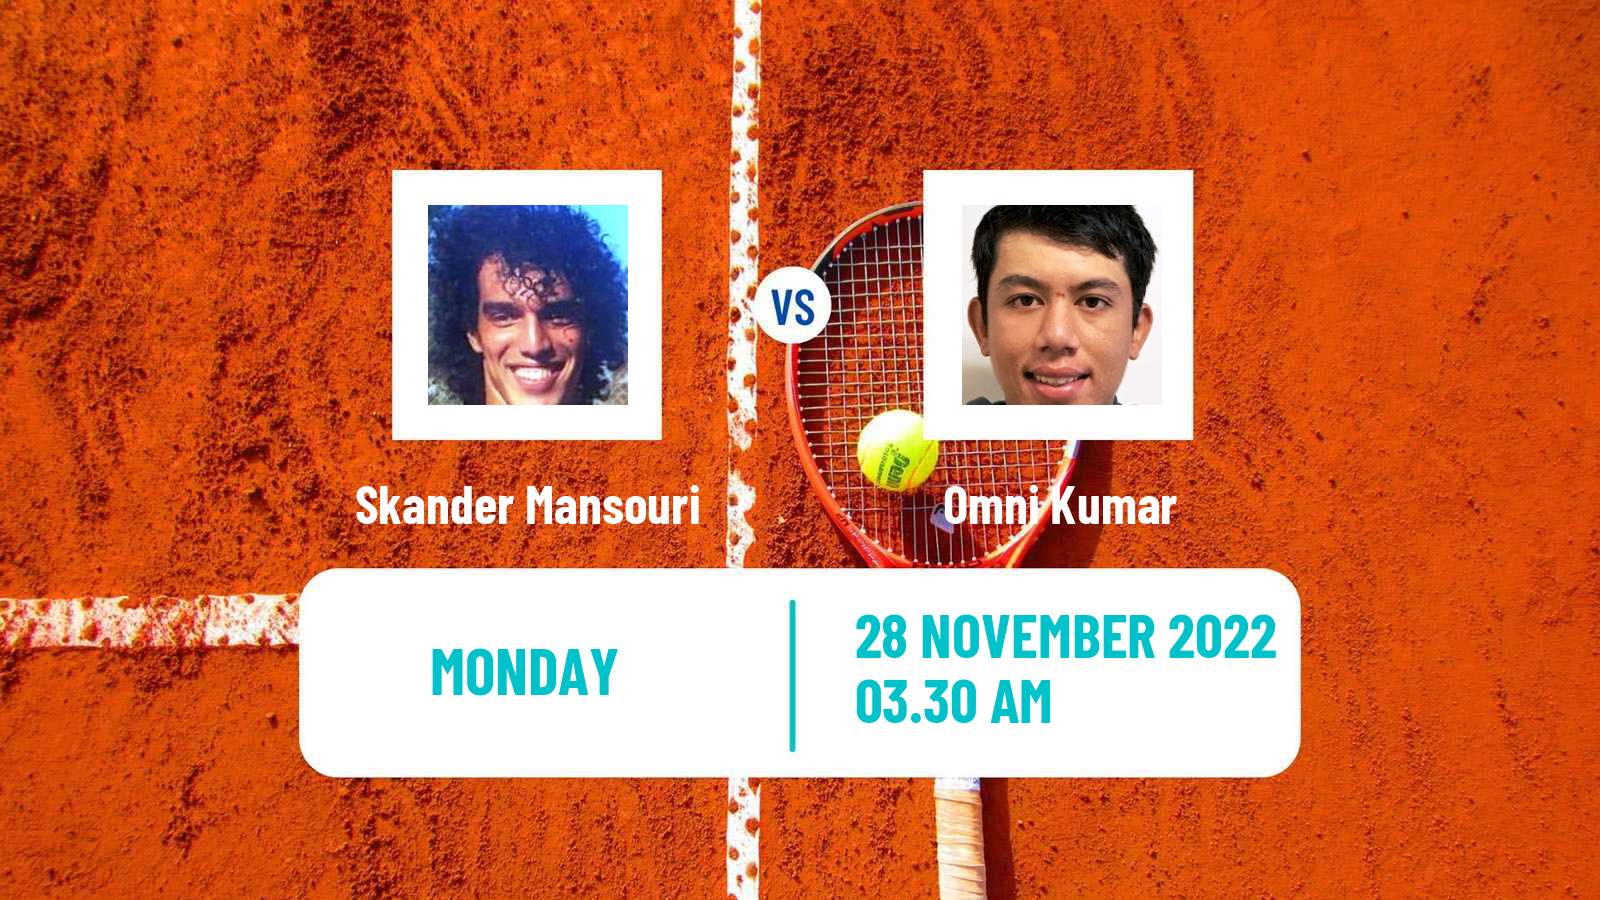 Tennis ITF Tournaments Skander Mansouri - Omni Kumar